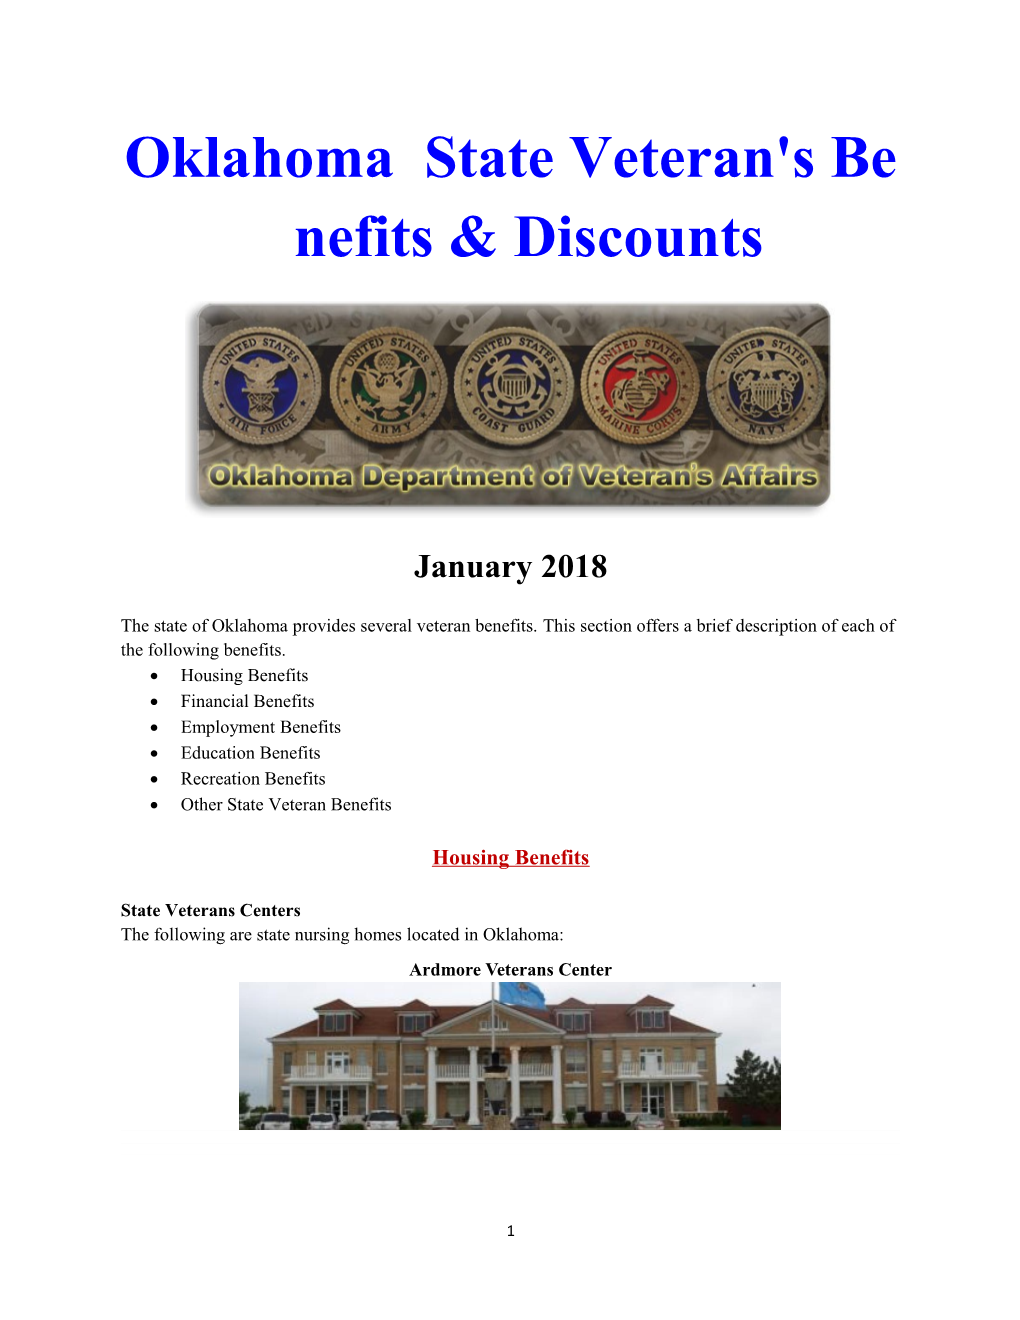 Oklahoma State Veteran's Benefits & Discounts